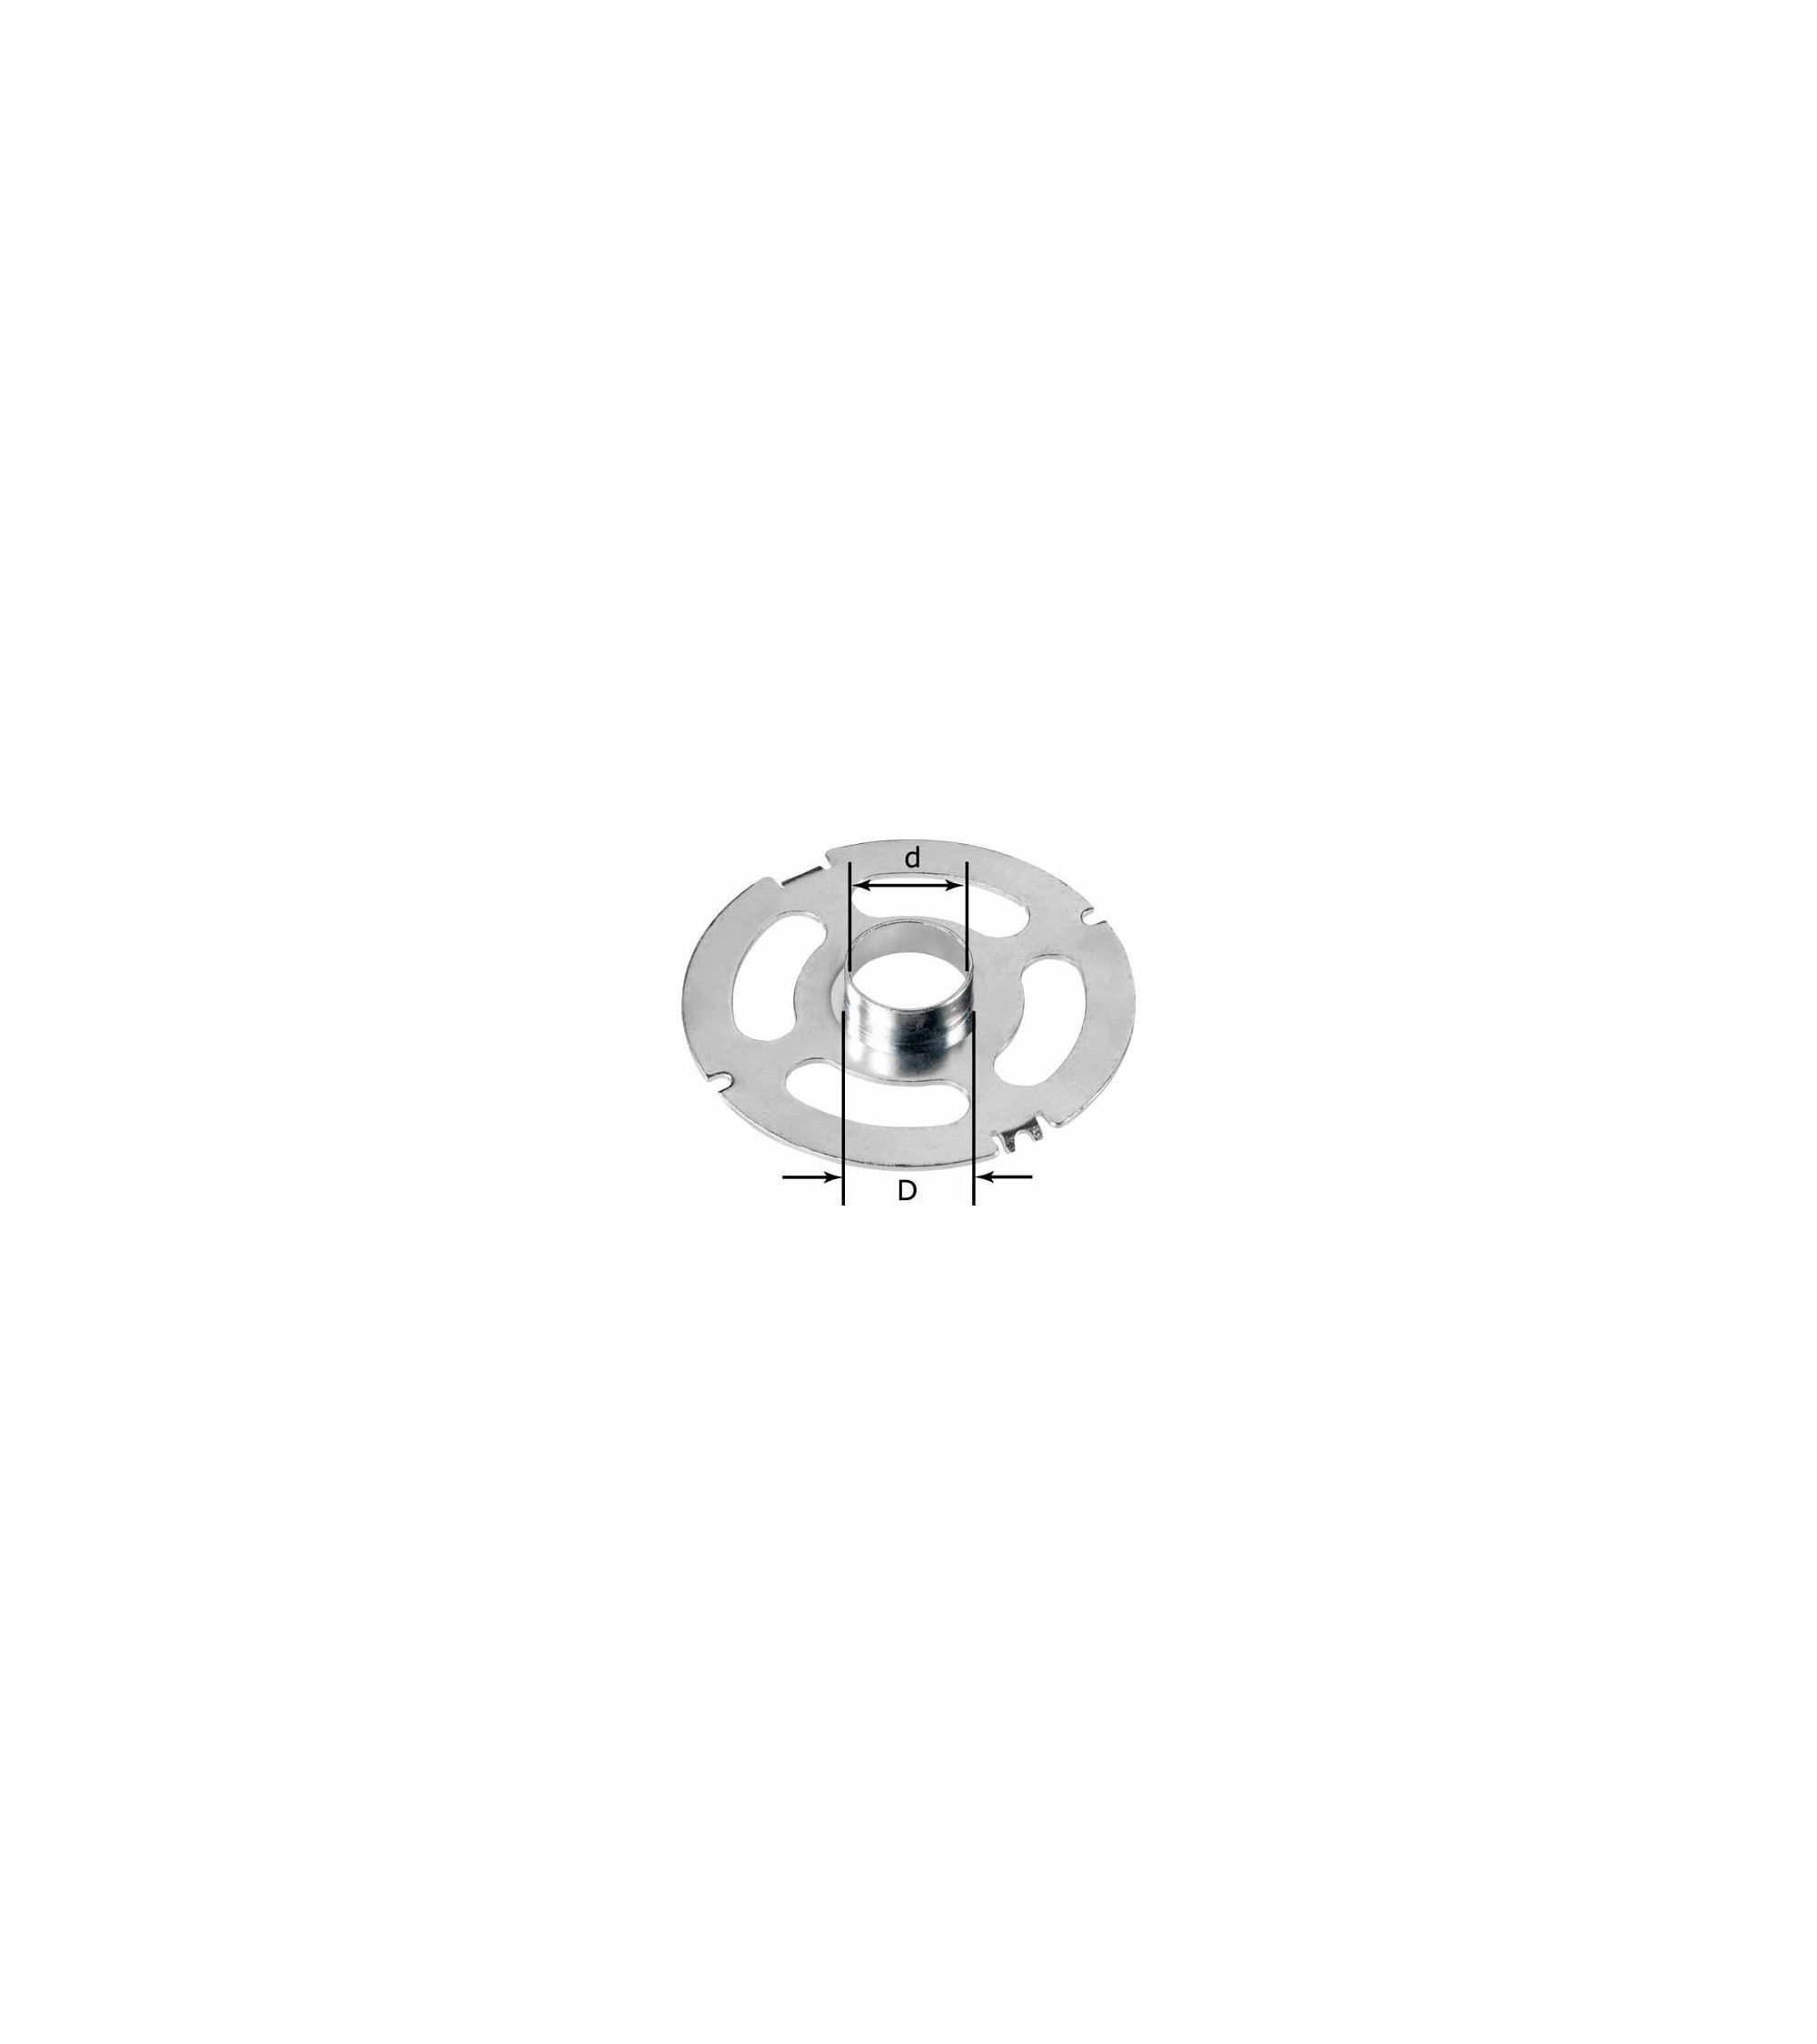 Festool Copying ring KR-D 17,0/OF 1400, KAINA BE PVM: 19.845, KODAS: 493315 | 001